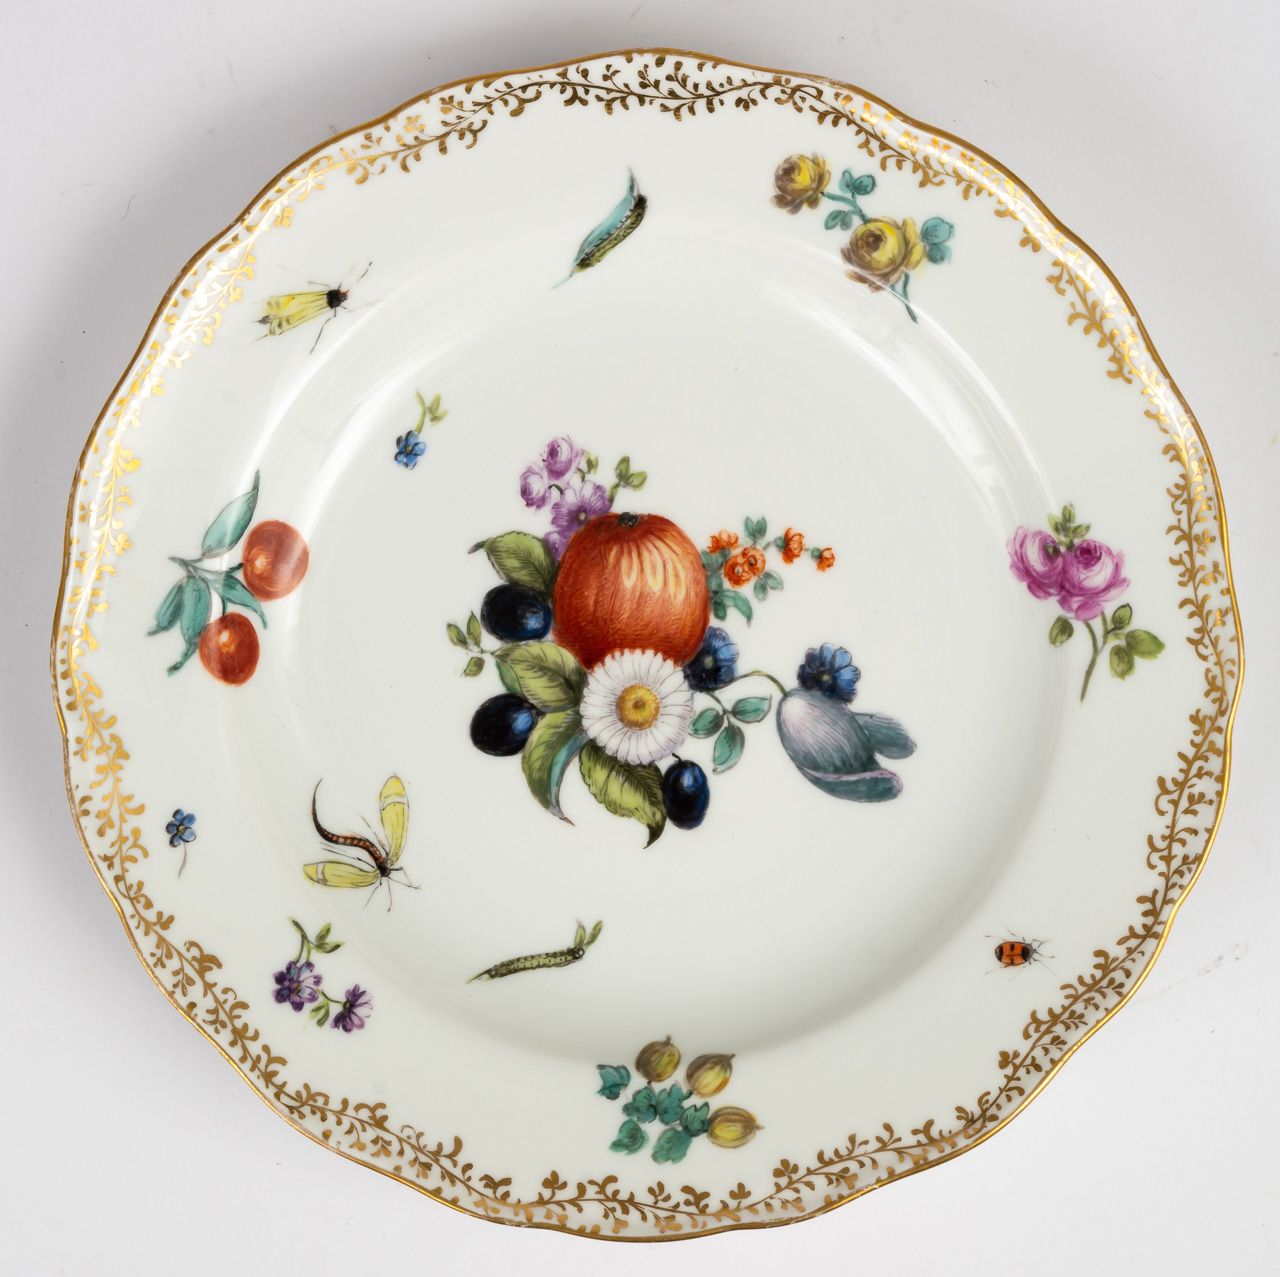 TELLER MIT BLUMEN Meissen, porcelaine, 2e choix

D : 23,5 cm